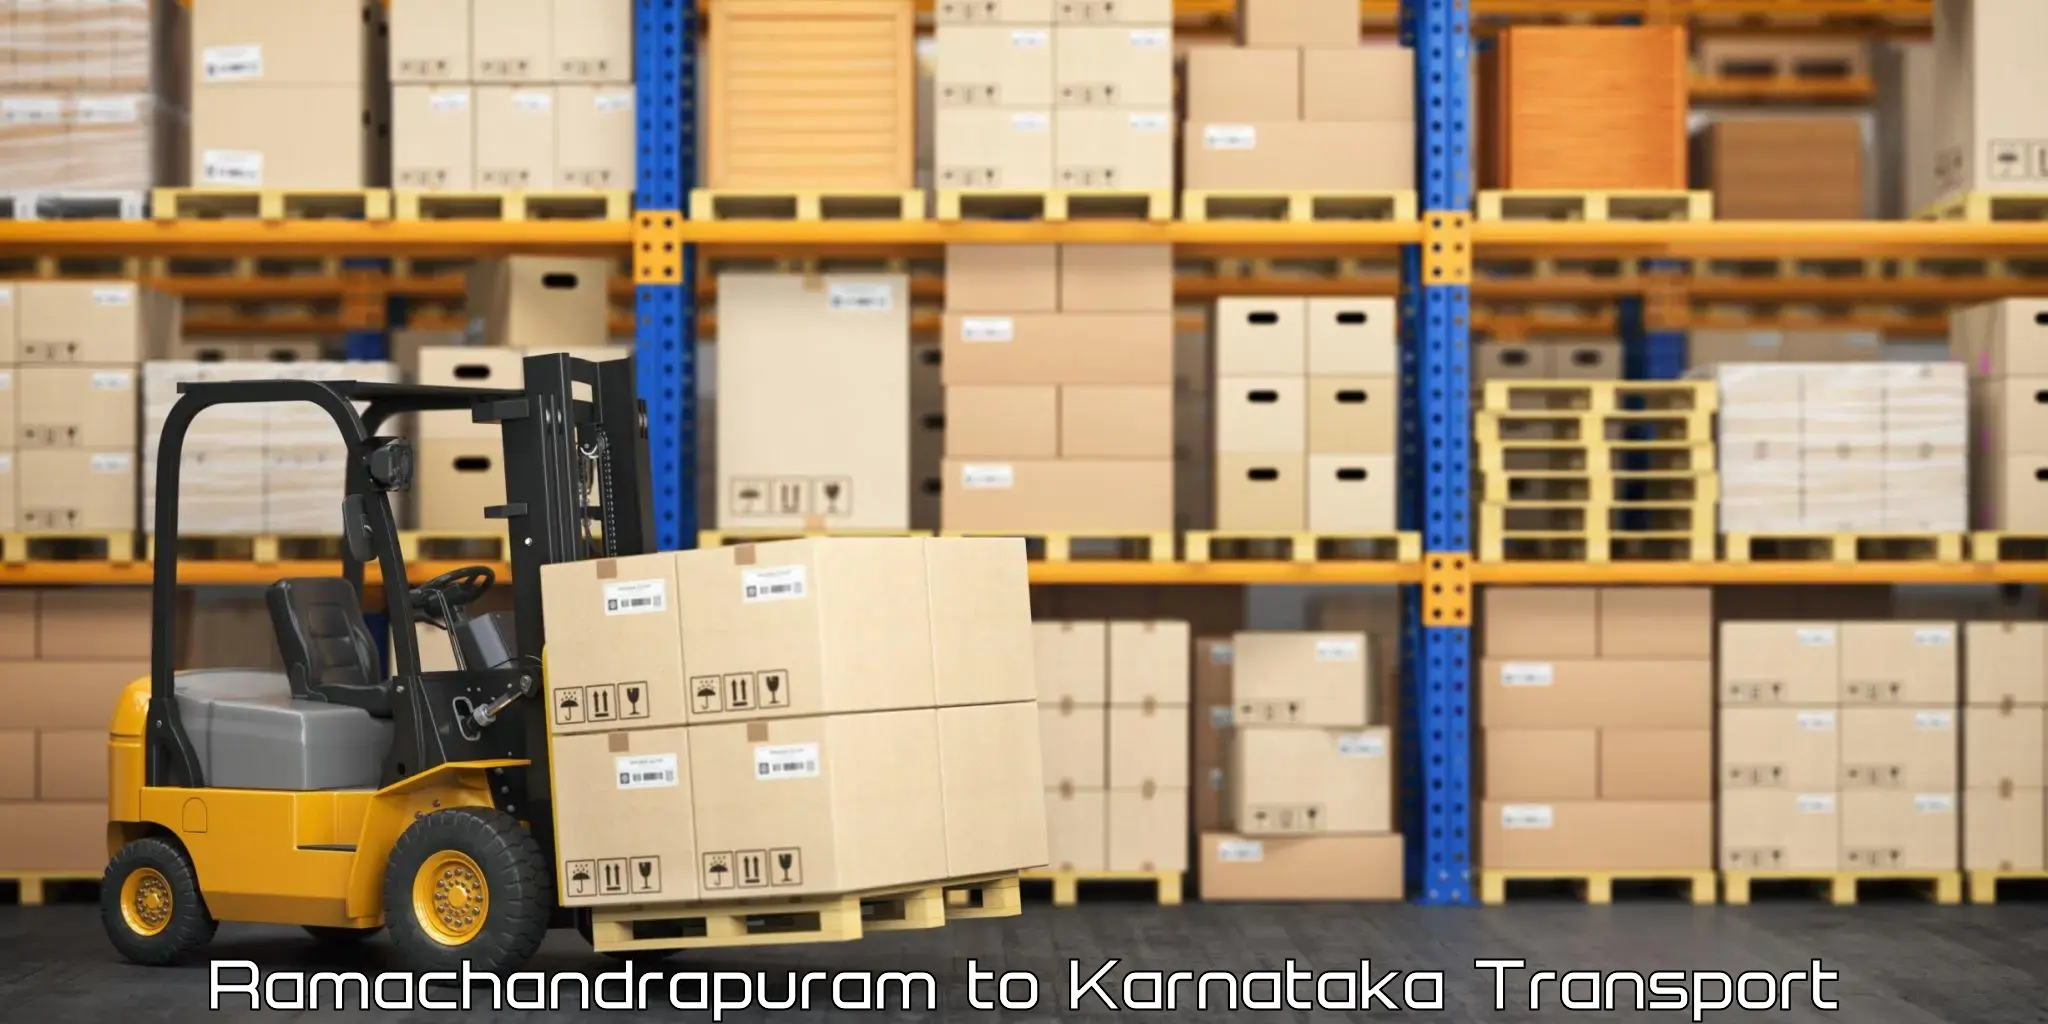 Truck transport companies in India Ramachandrapuram to Manipal